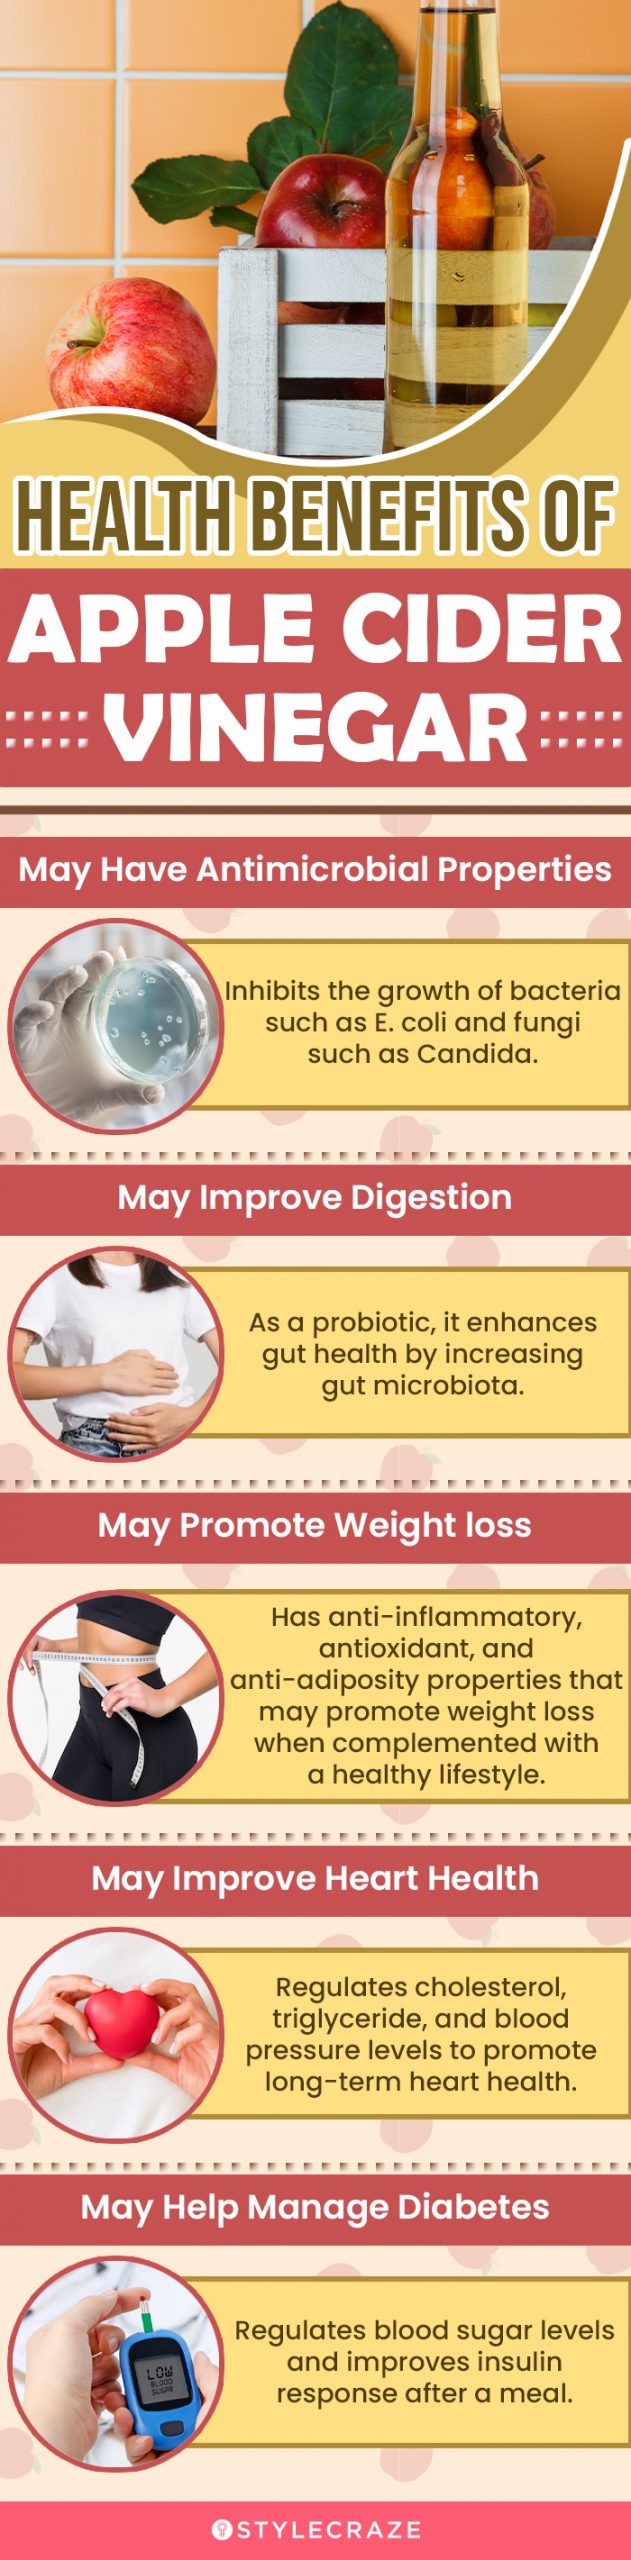 health benefits of apple cider vinegar (infographic)